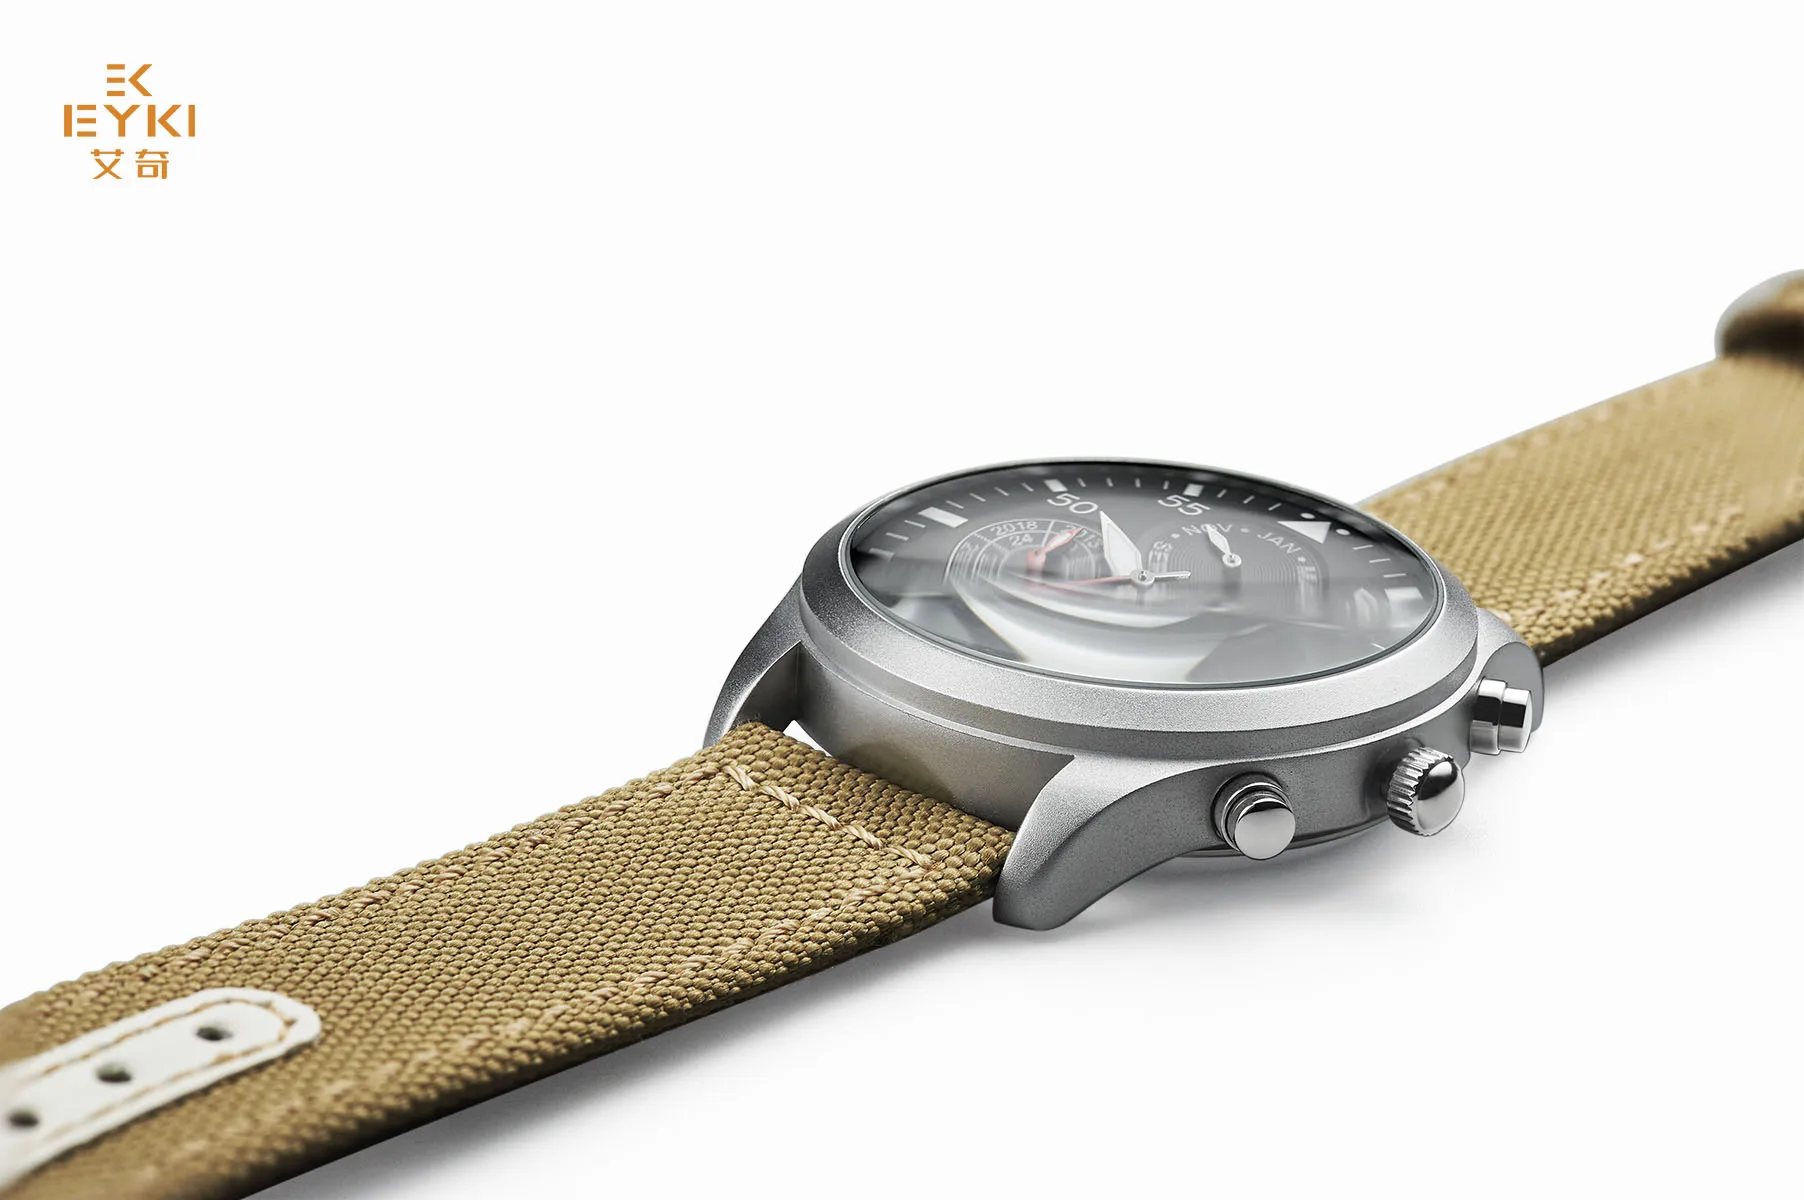 OEM Design Fashion Men Stainless Steel Waterproof Luxury Wristwatch Custom LOGO Automatic Chronograph Watch reloj automat hombr